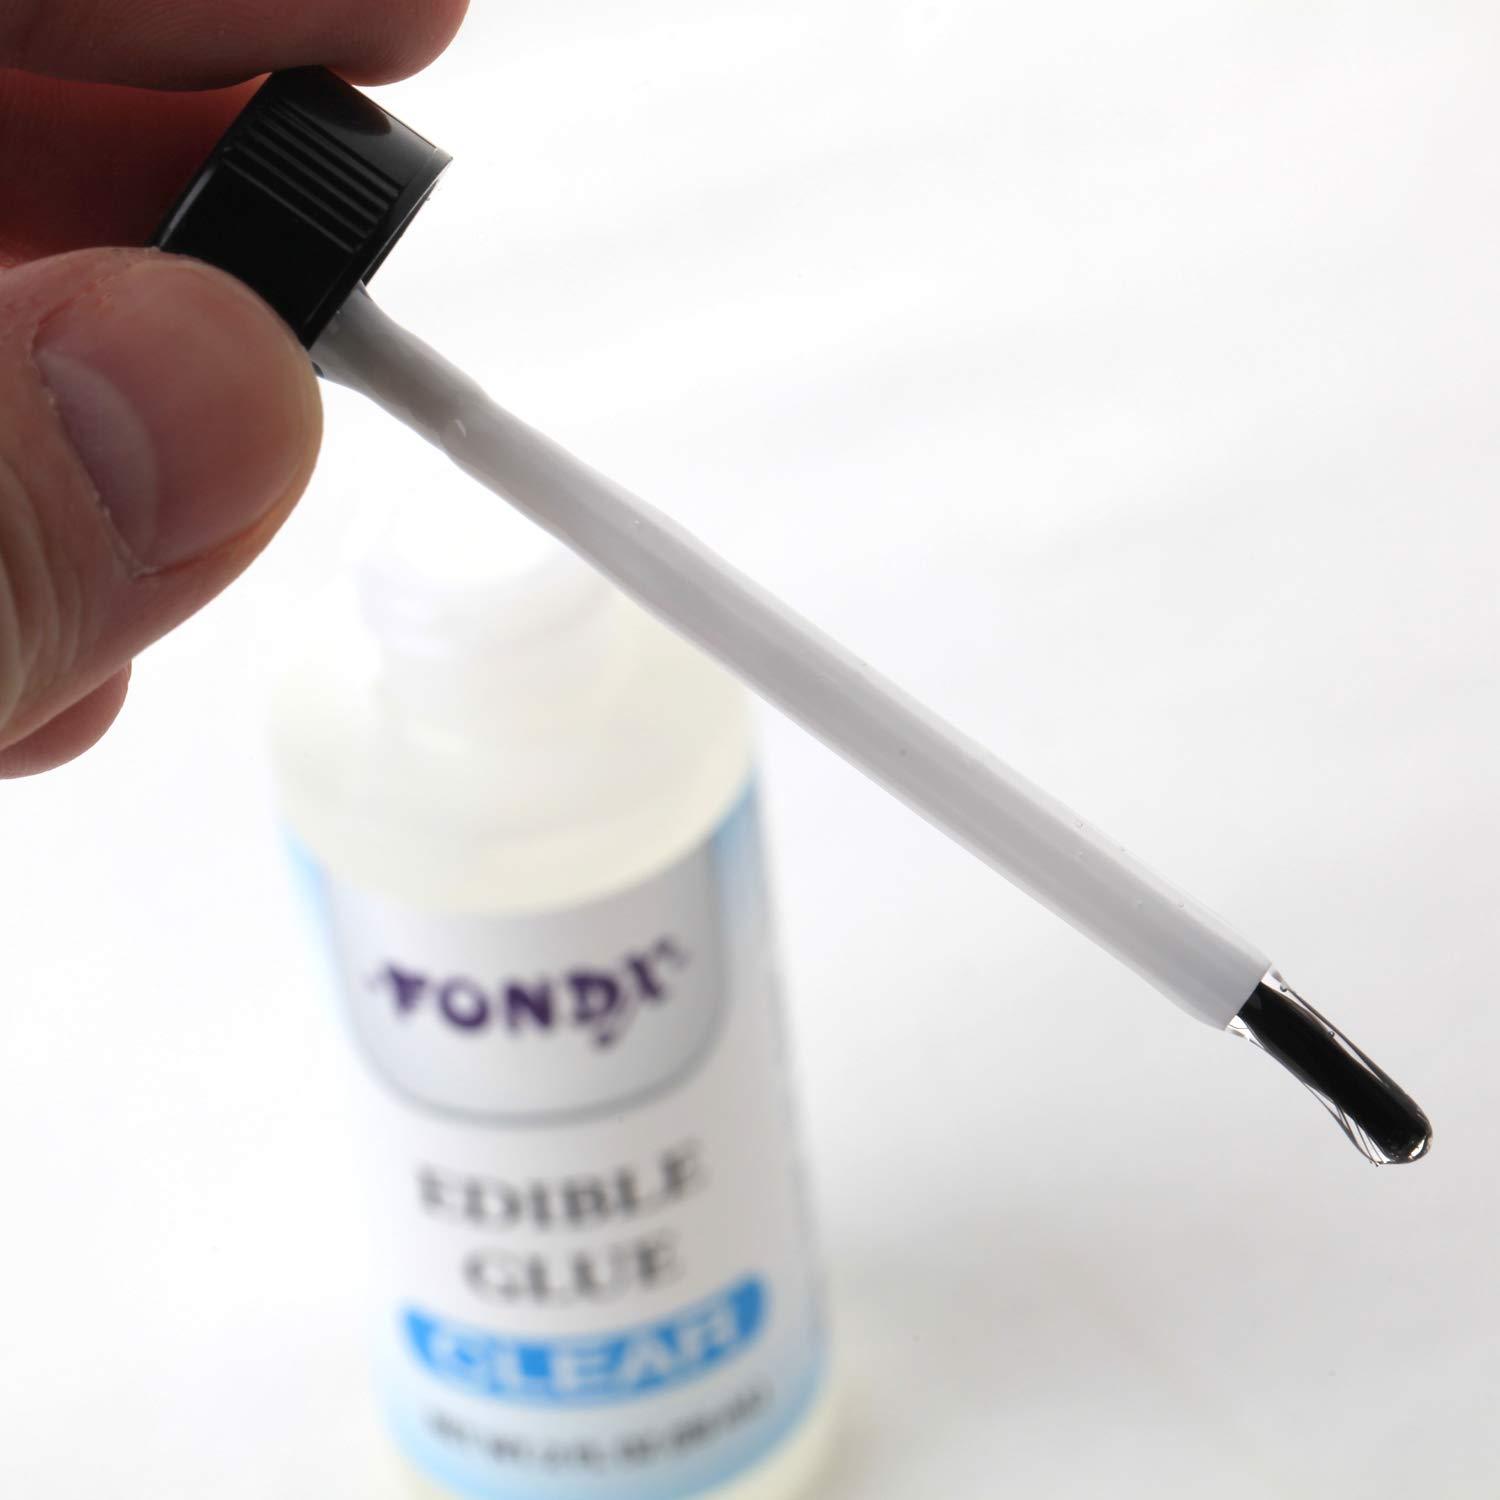 FONDX Edible Glue, Clear, 2 fl oz